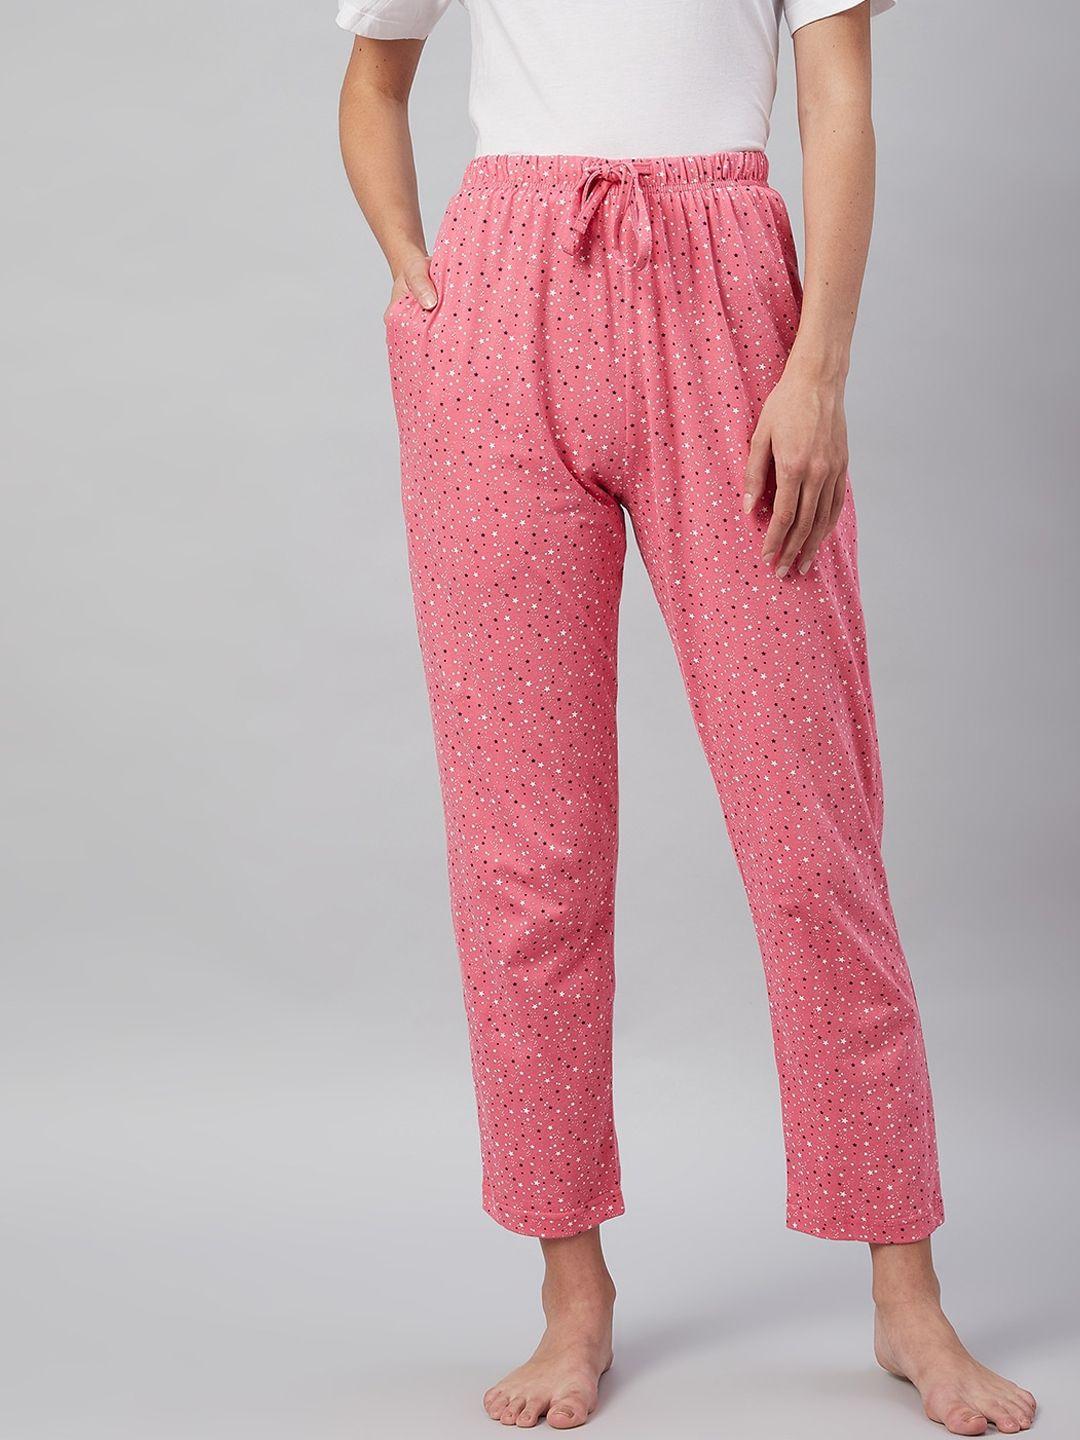 c9 airwear women pink & white printed pure cotton lounge pants